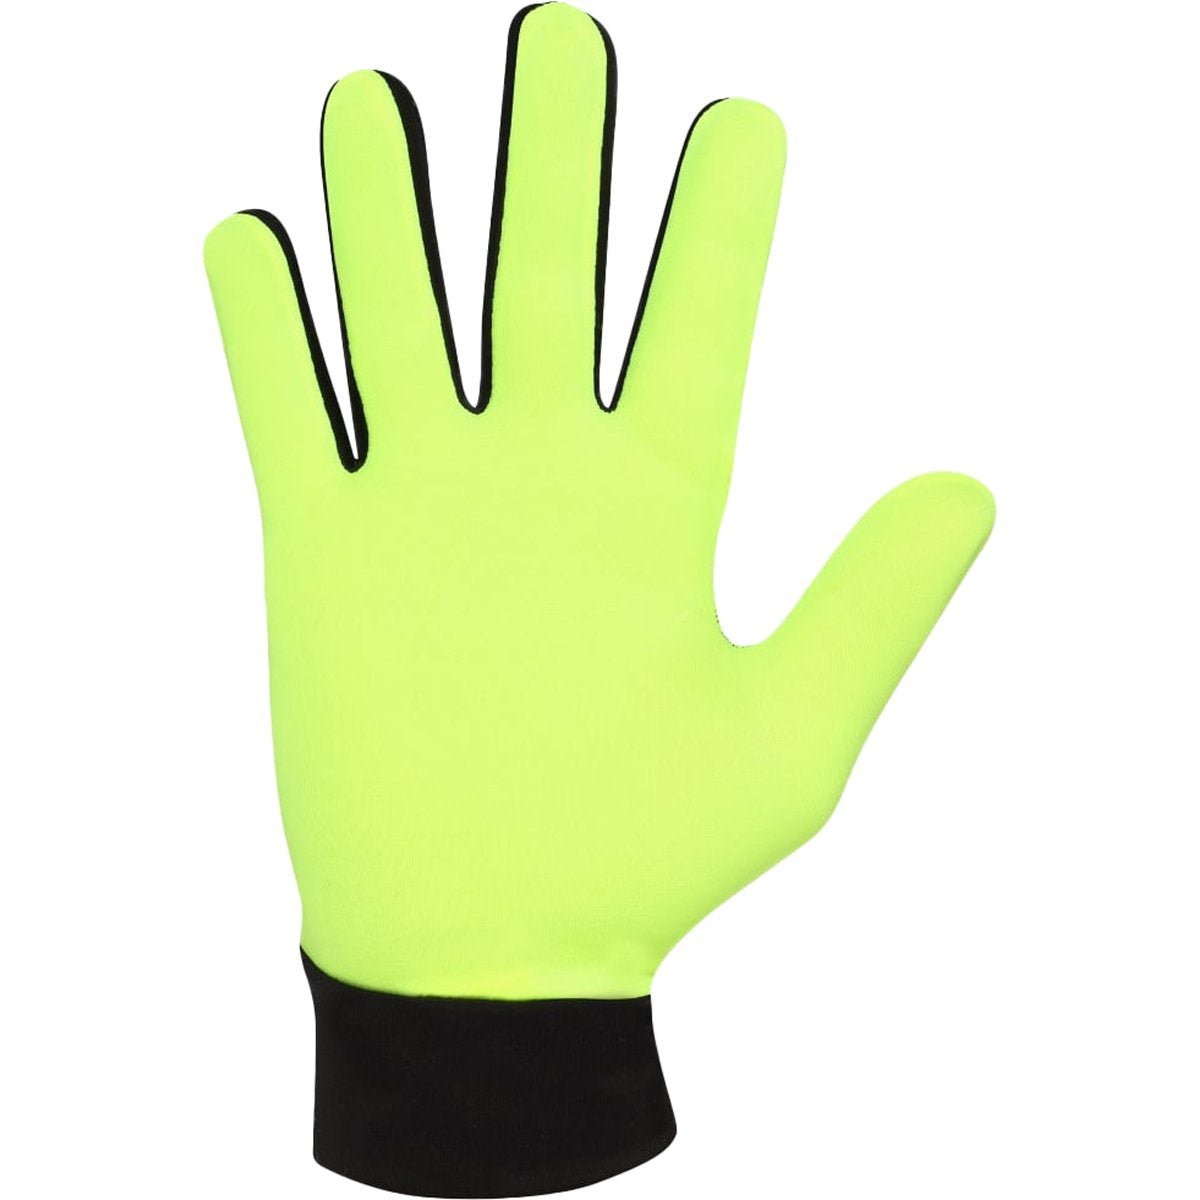 Orrell Men’s Cycling Gloves - Optimum